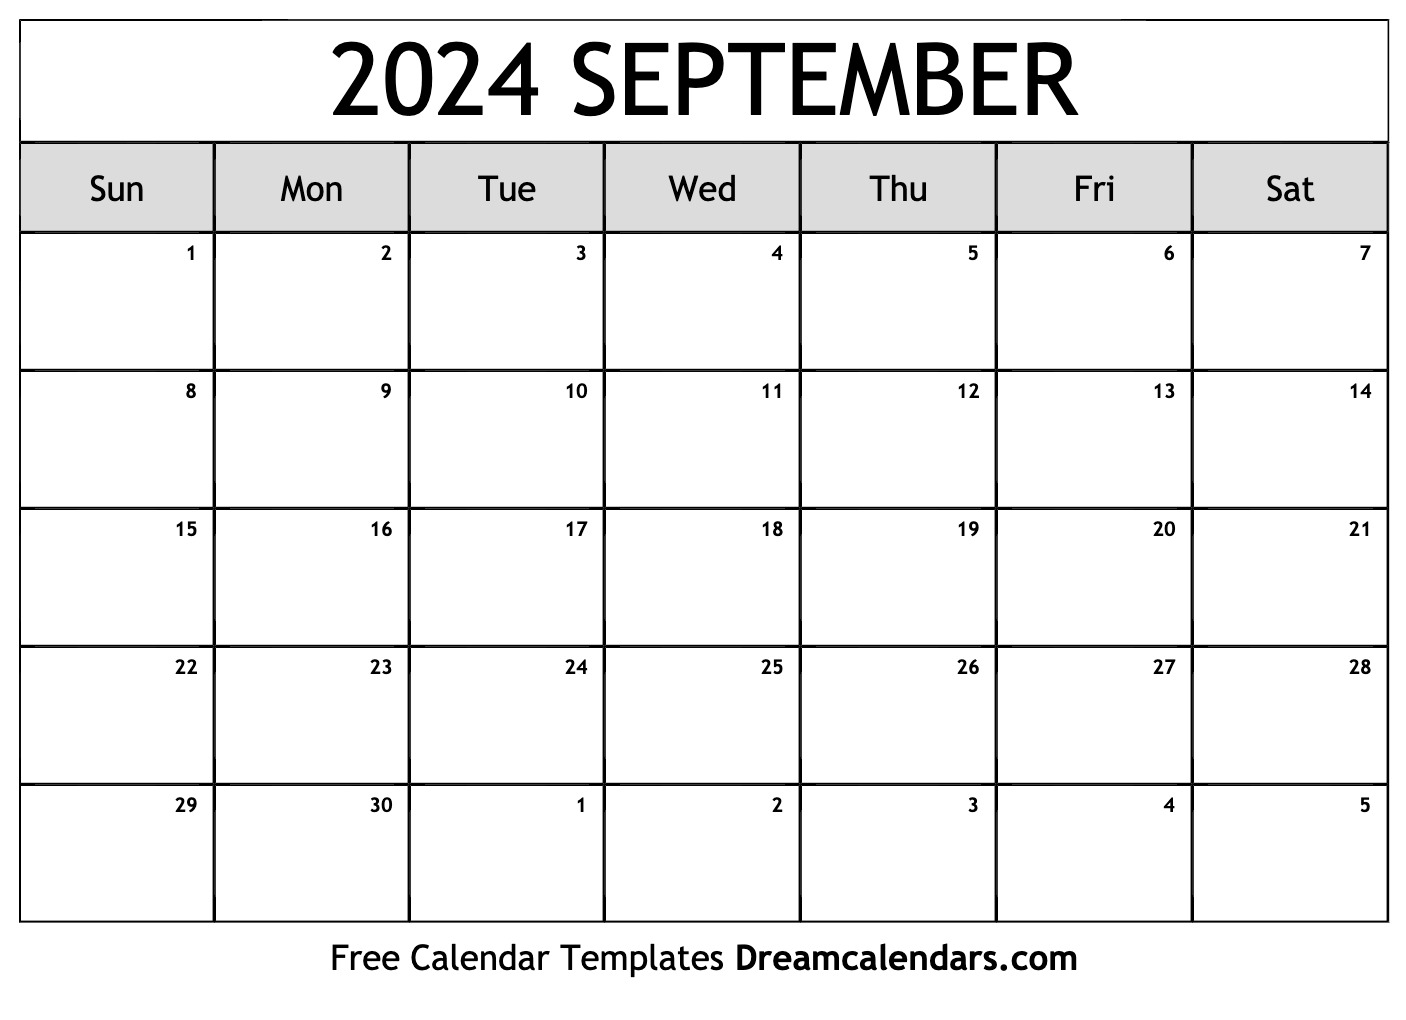 Print 2024 September Calendar Templates Meaning 2024 Calendar